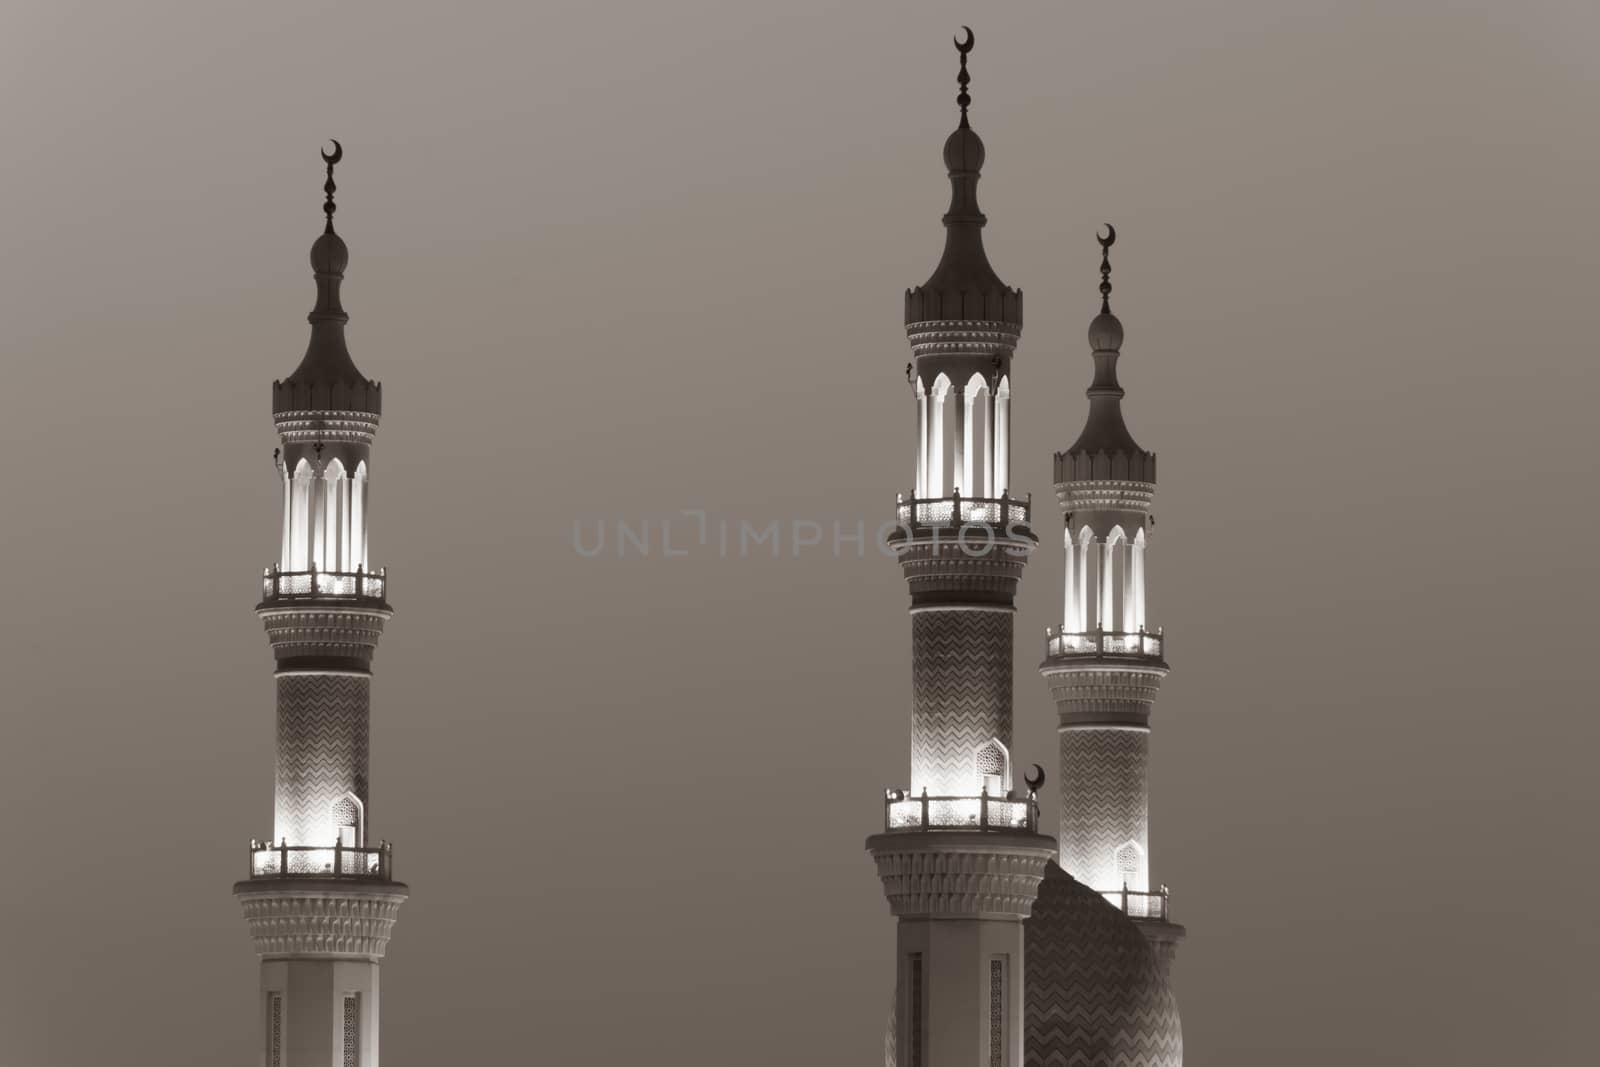 Islamic mosque spires in black and white echos prayer calls at night. Muslim, ramadan, religion concepts.